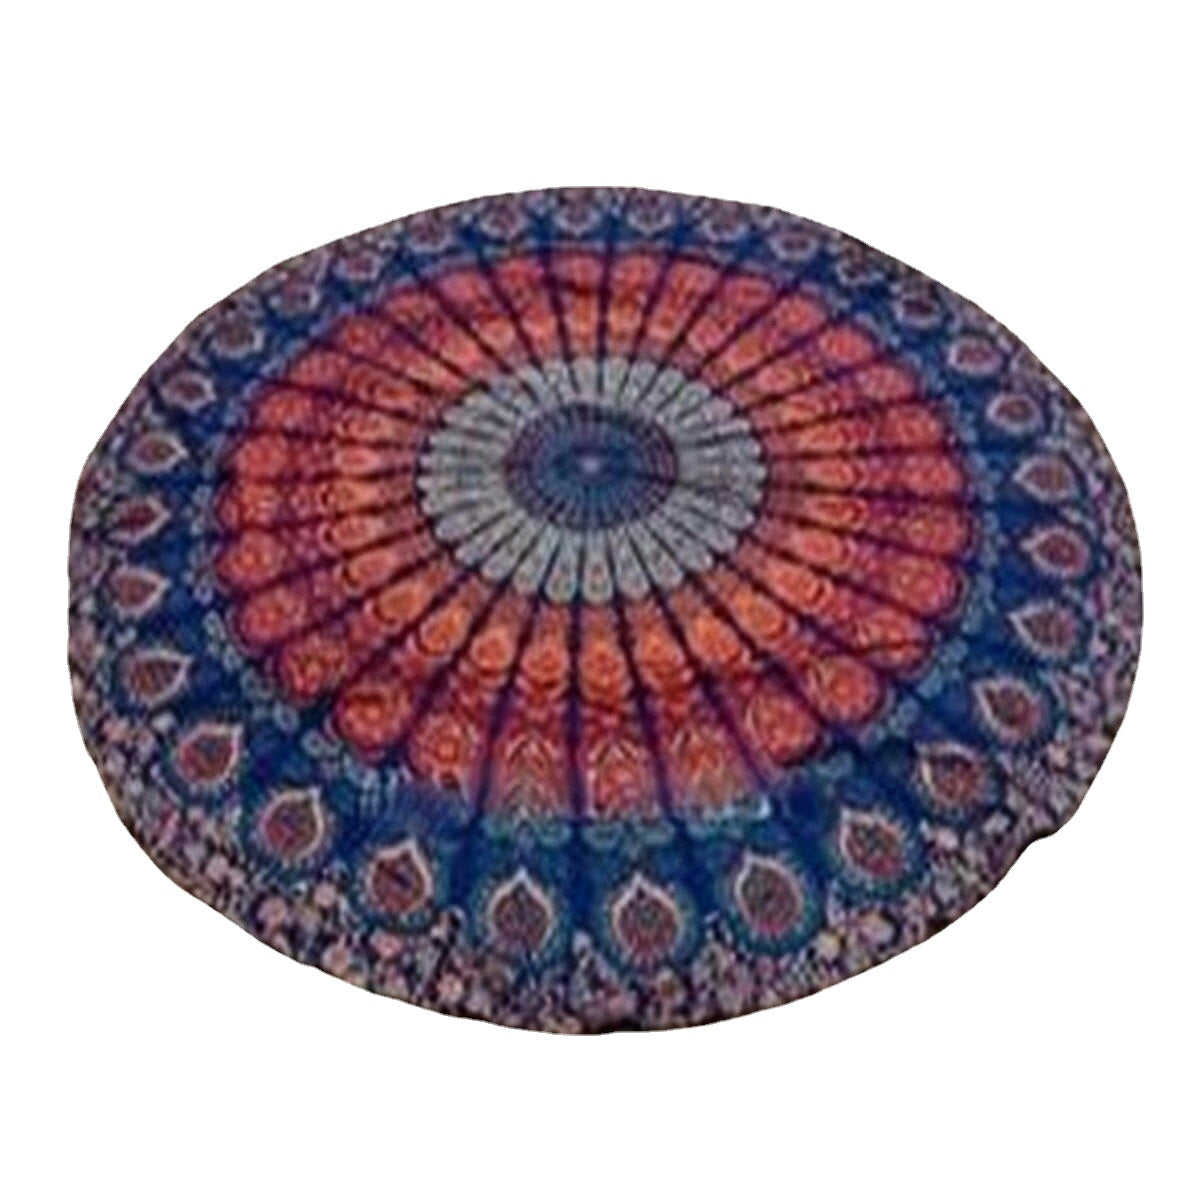 150cm Bohemian Thin Chiffon Beach Towel Mat Mandala Round Silk Scarf Bed Sheet Tapestry